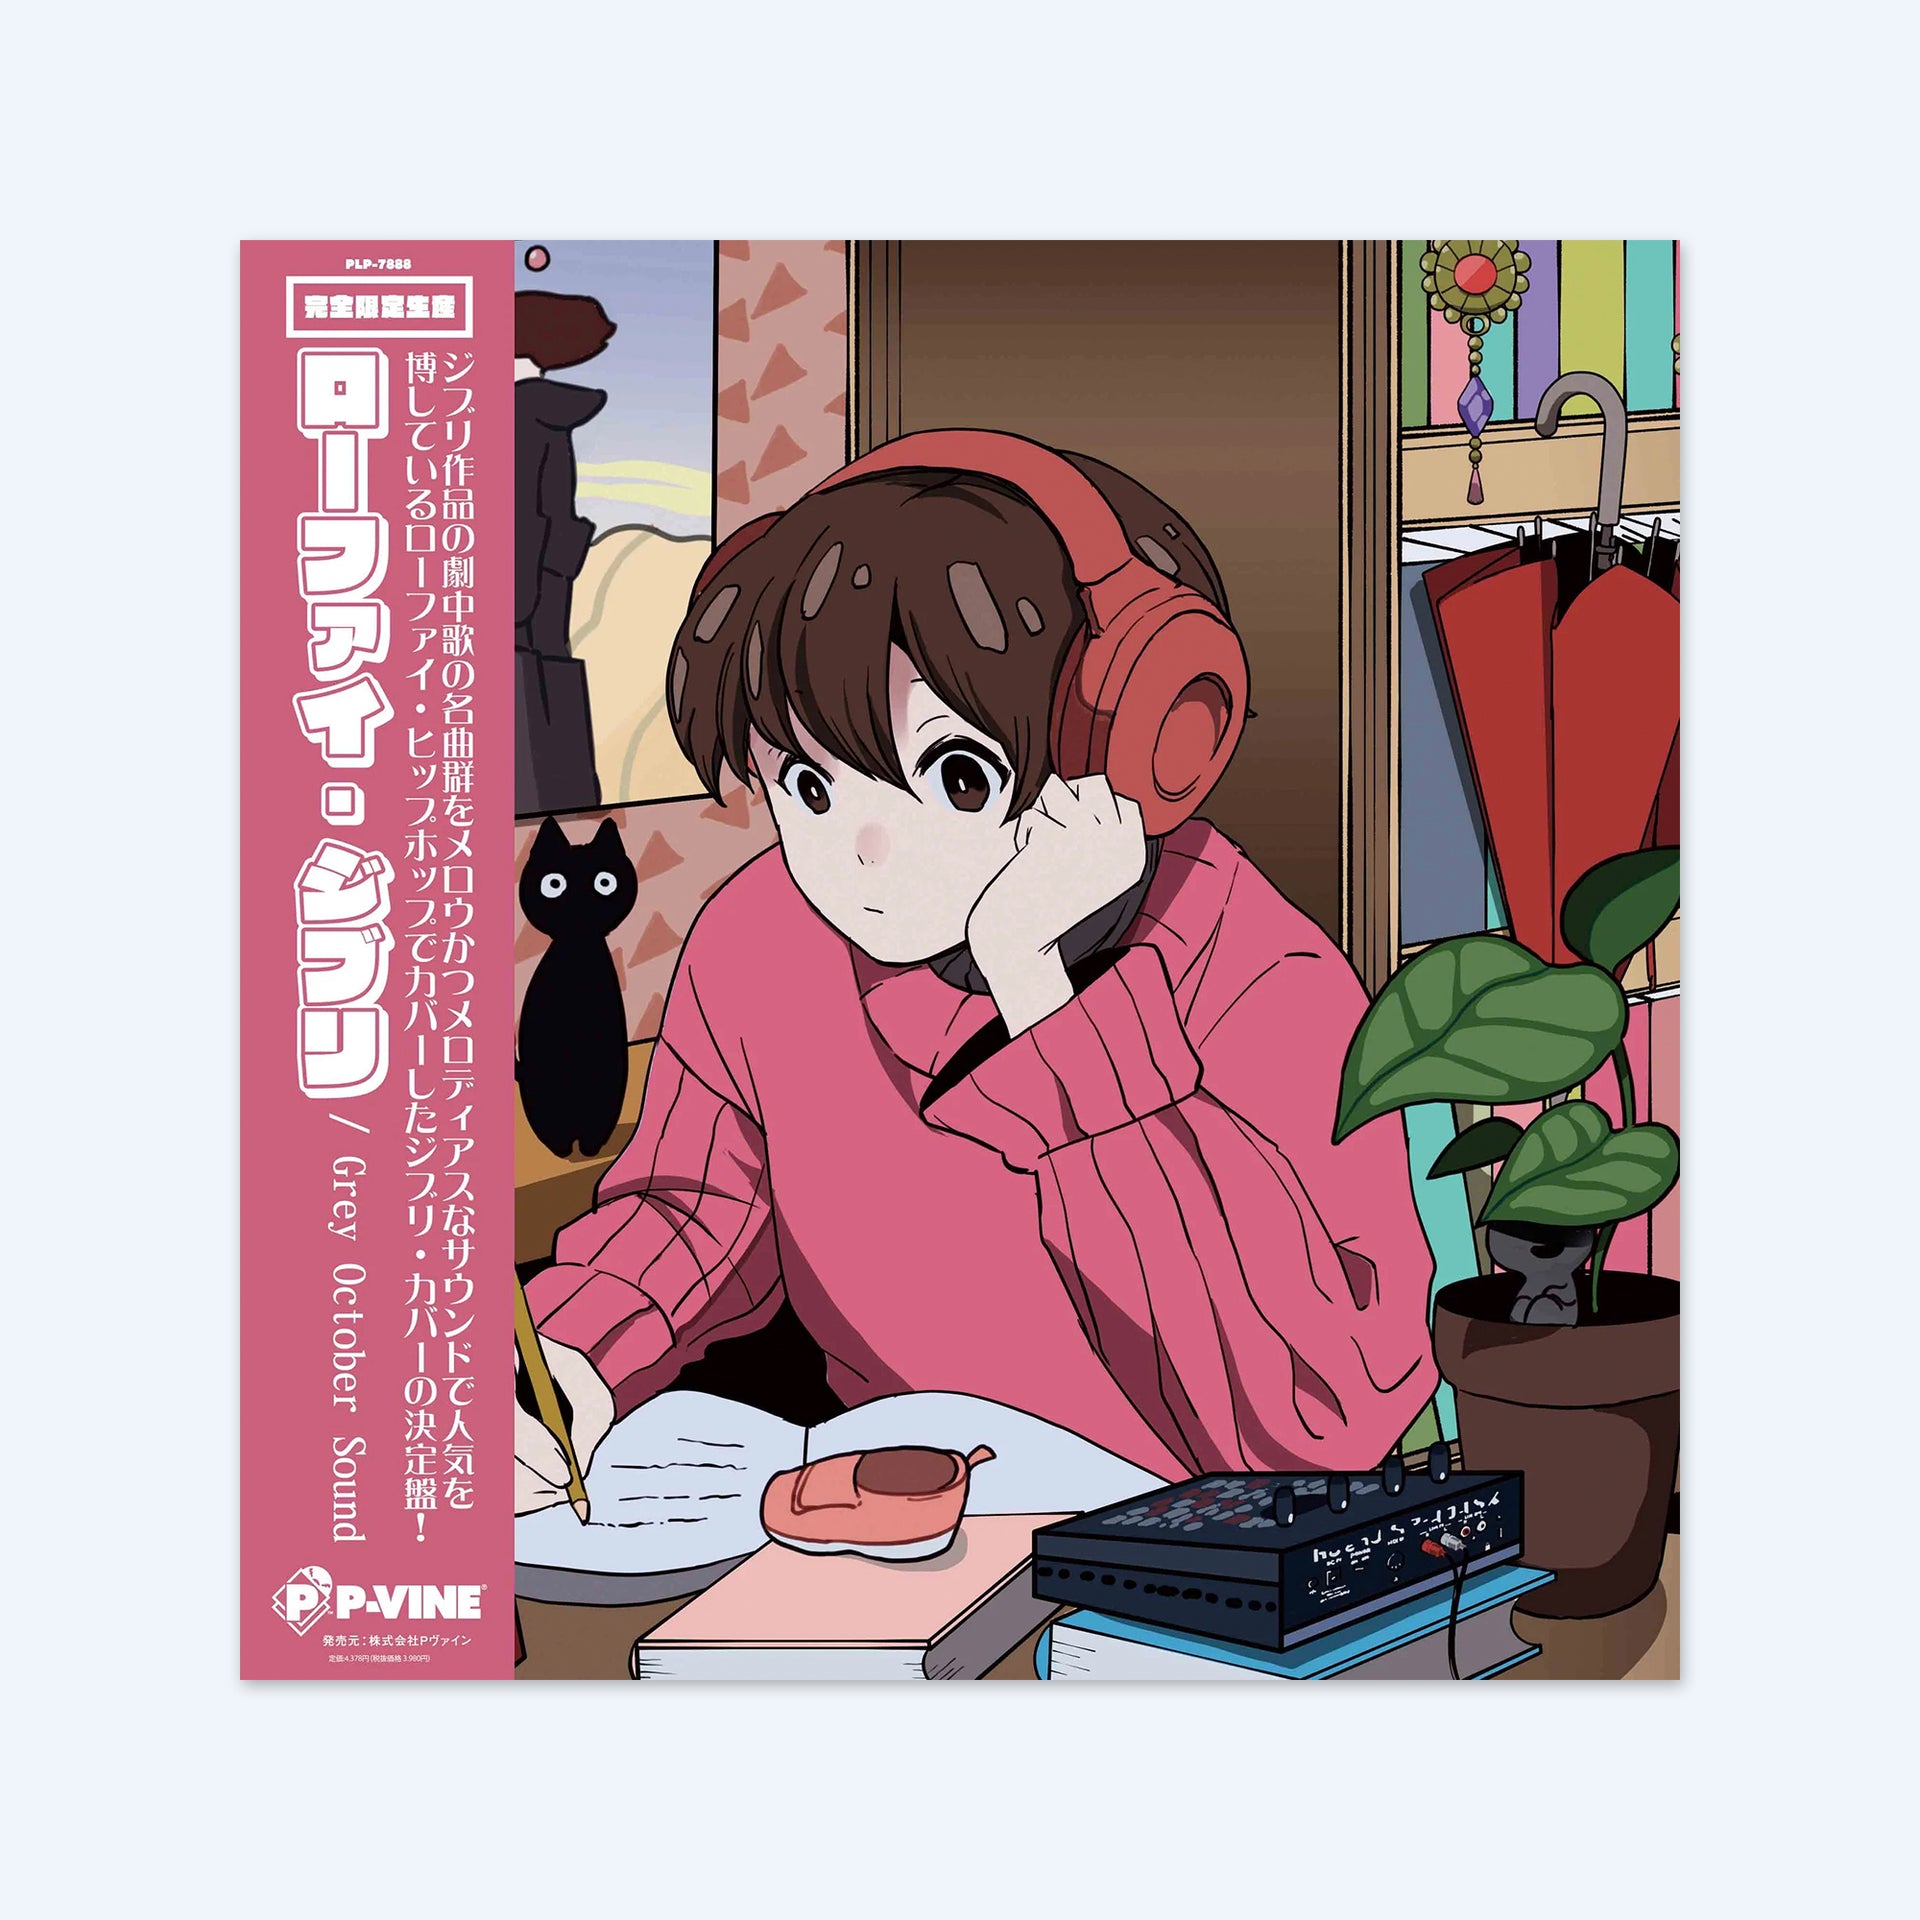 Lo-Fi Ghibli LP by Grey October Sound